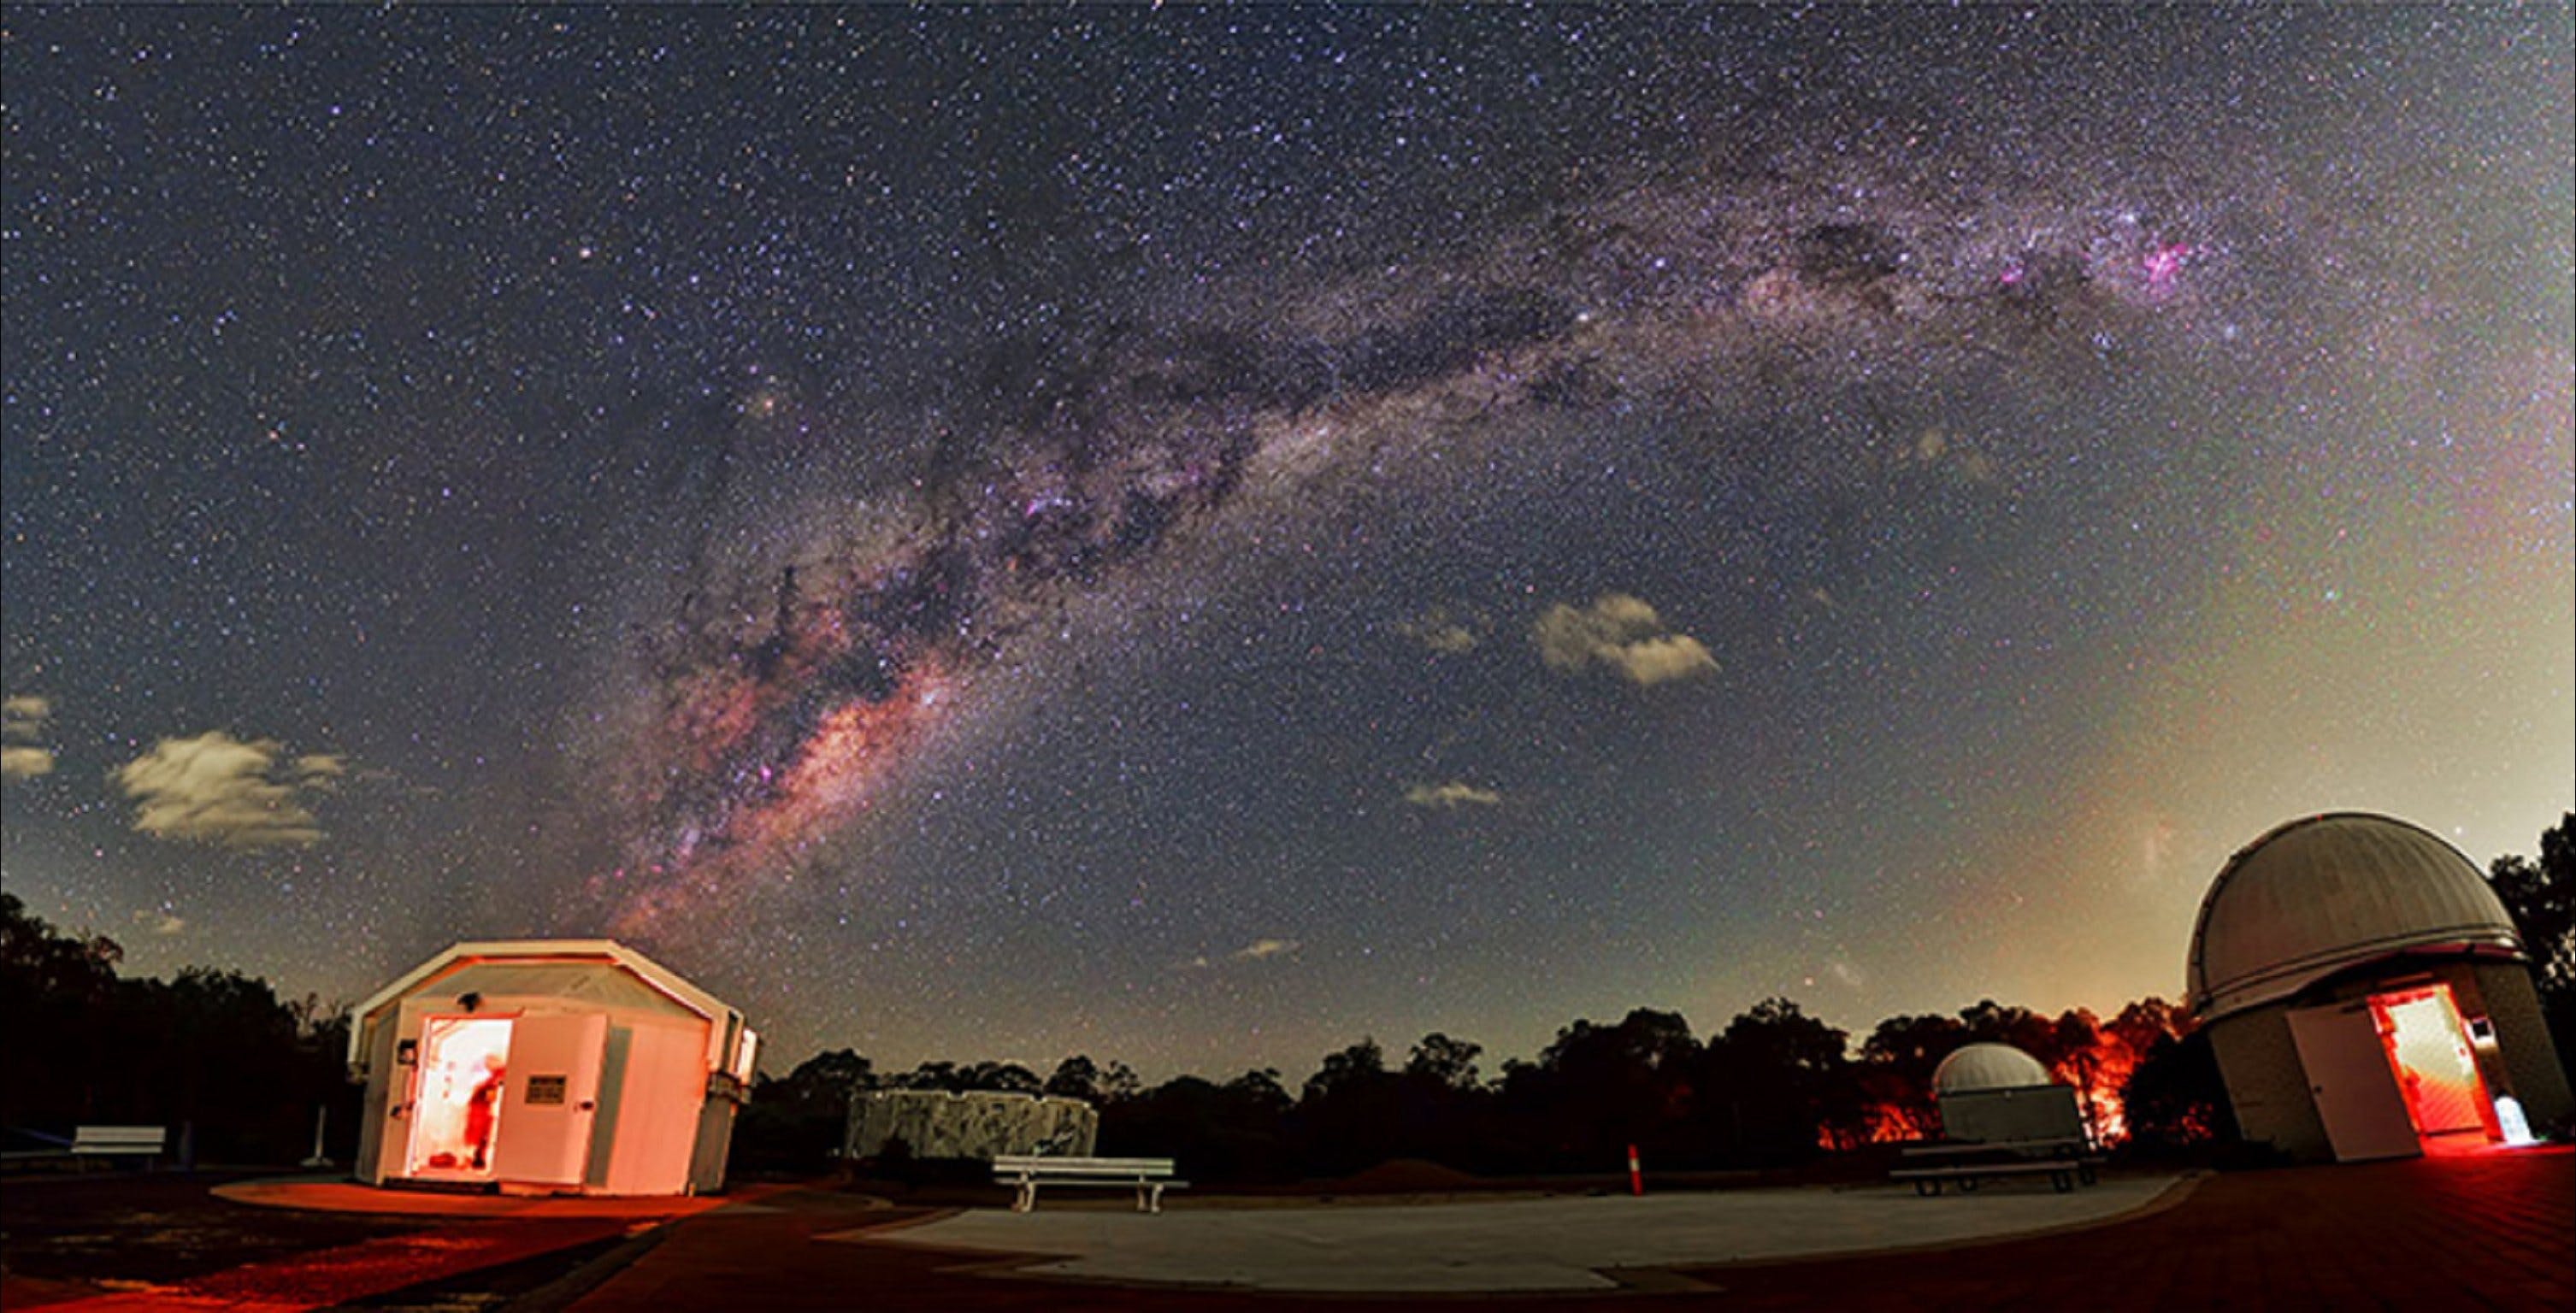 Perth Observatory - Accommodation Fremantle